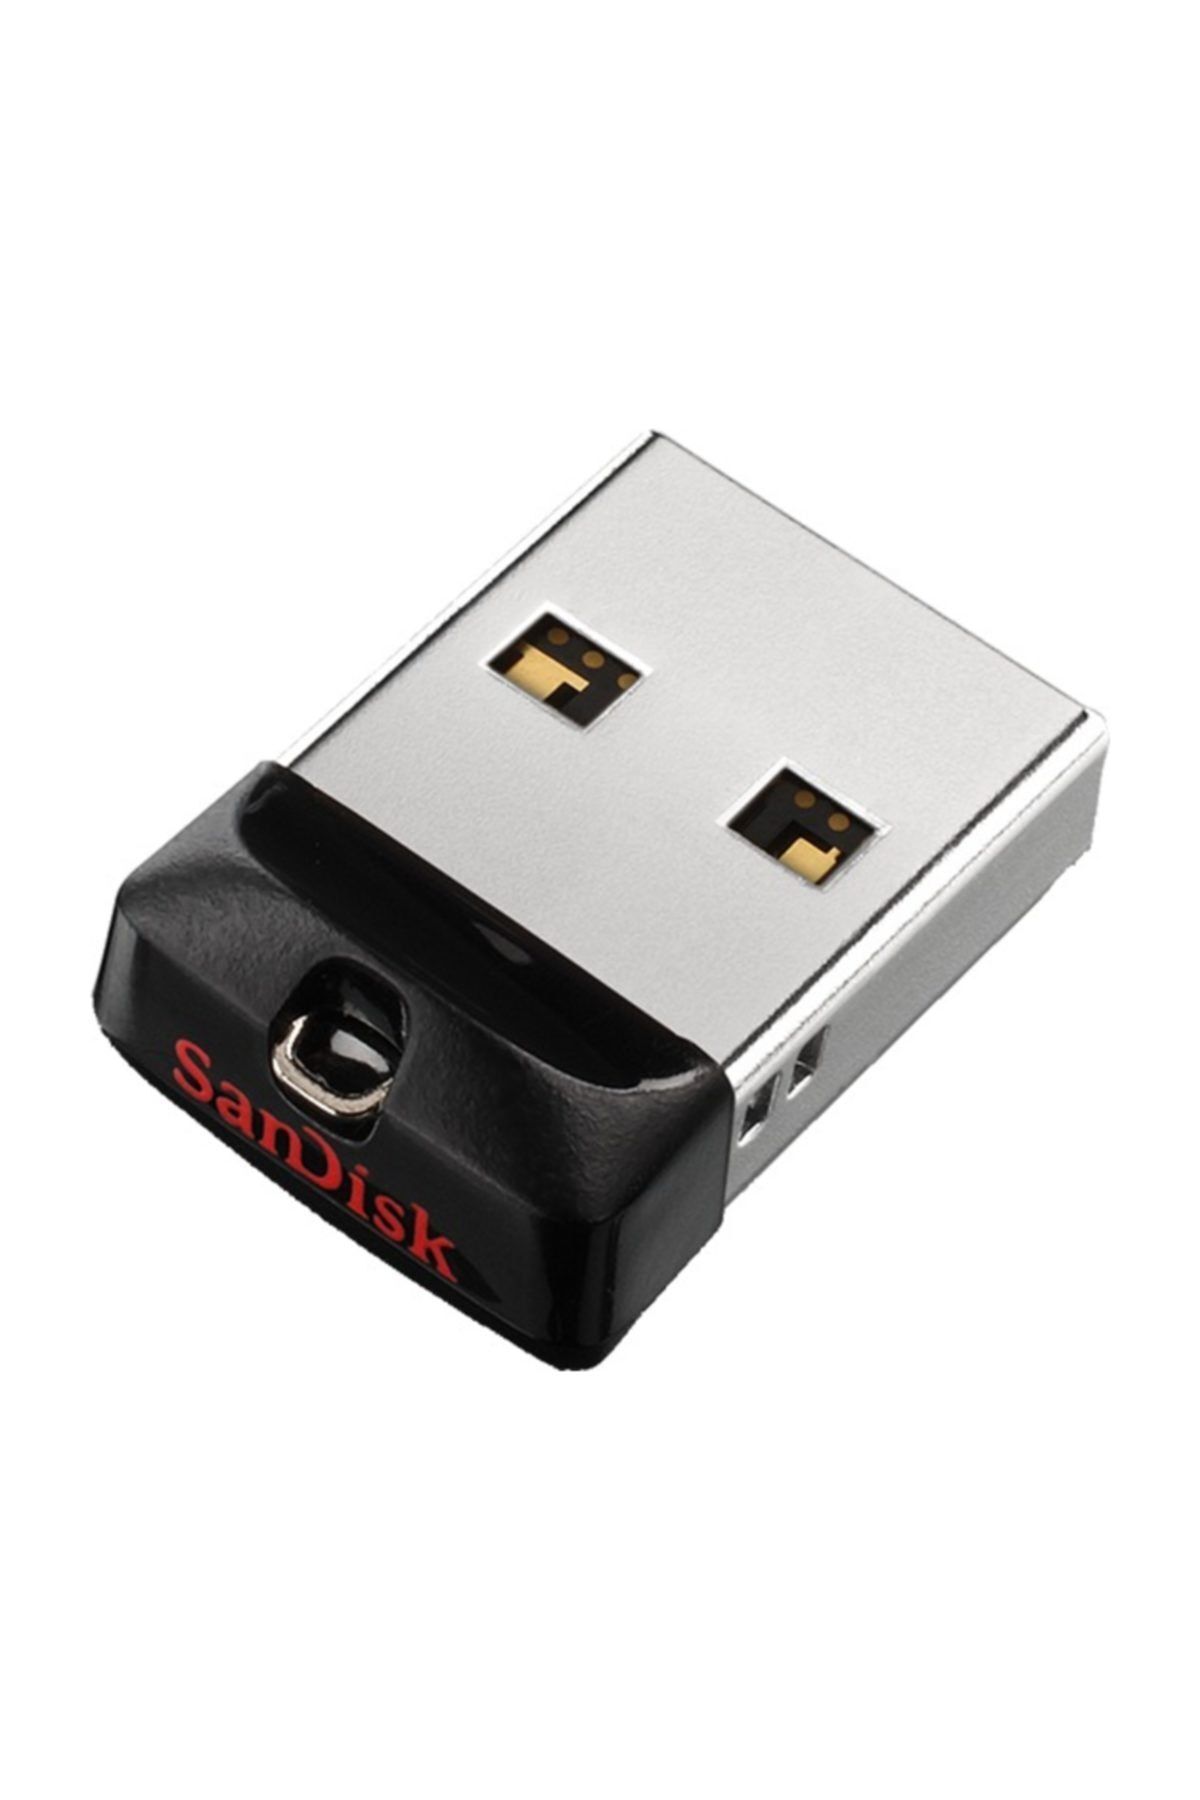 Sandisk Cruzer Fit USB 2.0 Bellek 64 GB SDCZ33-064G-G35